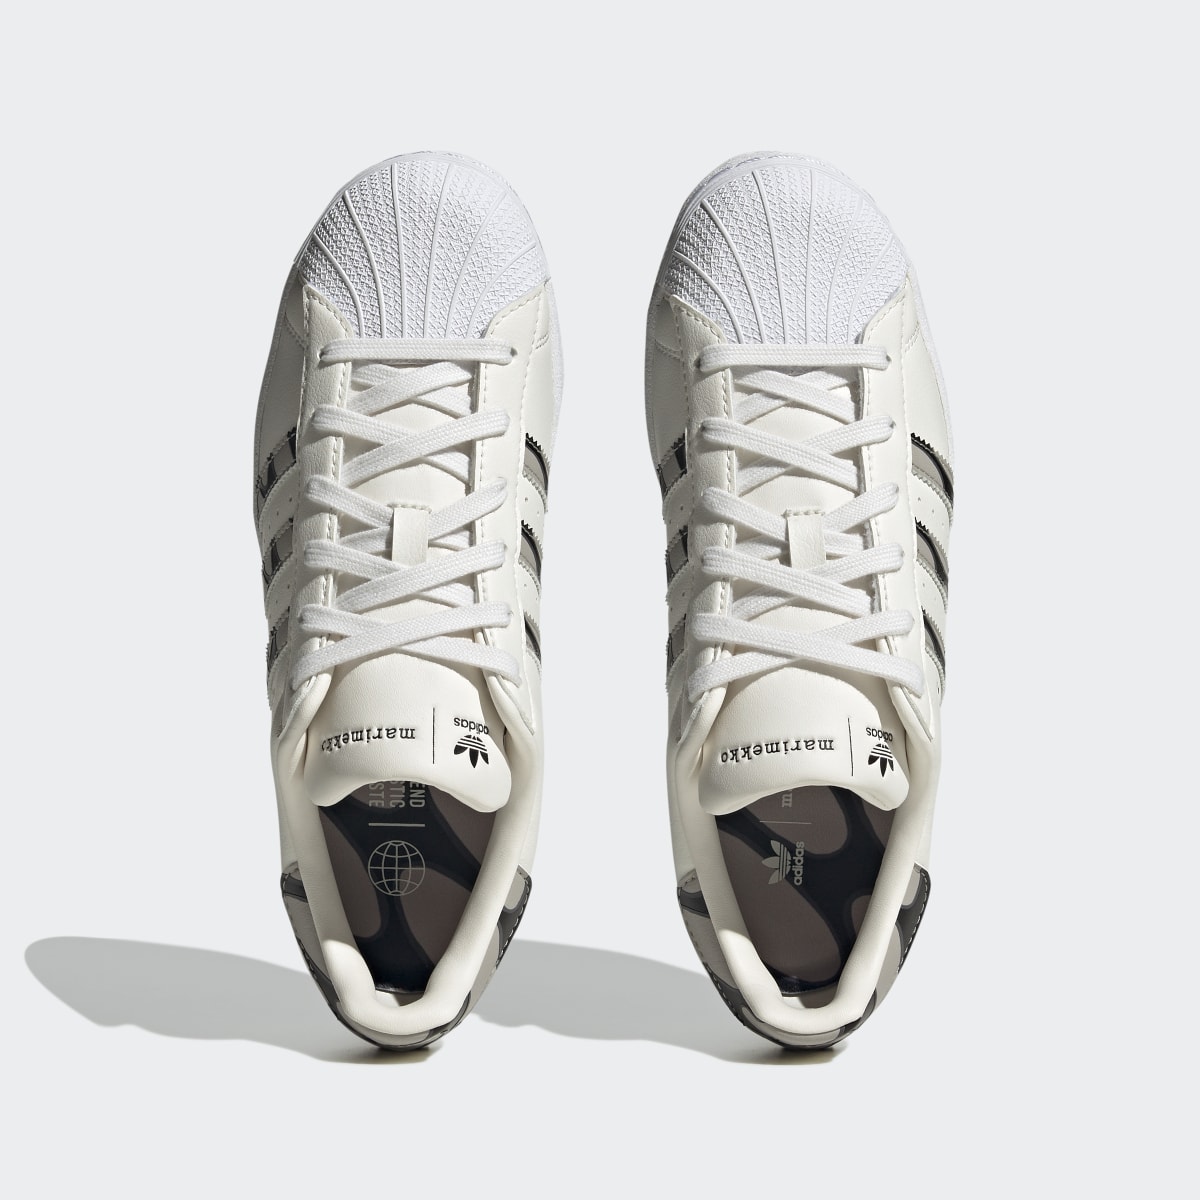 Adidas x Marimekko Superstar Shoes. 4